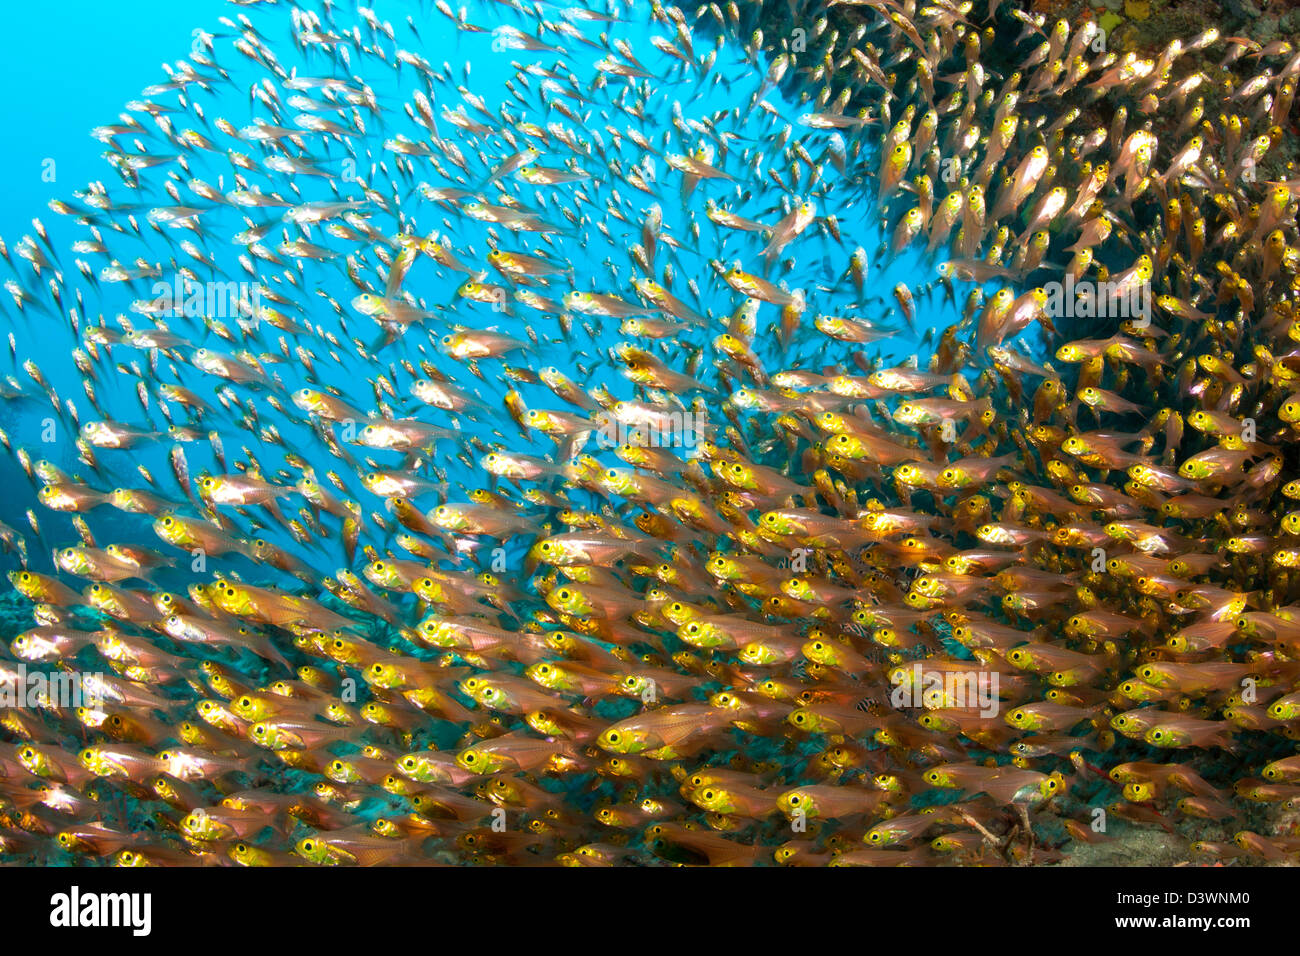 Shoaling Glassfish, Parapriacanthus sp., Ari Atoll, Maldives Stock Photo